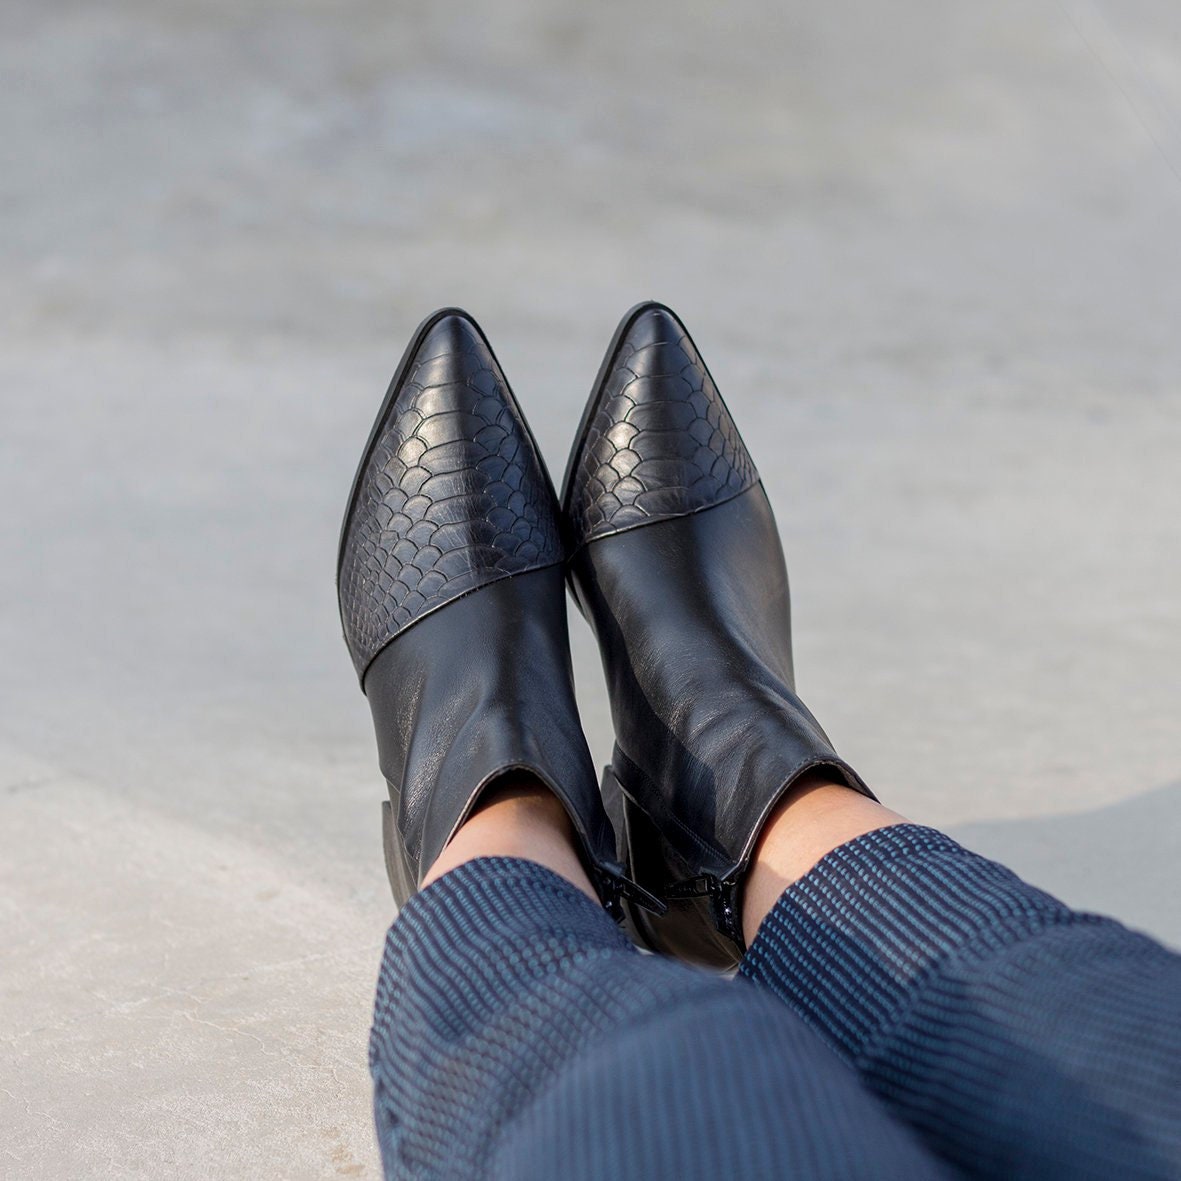 Black Snakeskin Booties Stylish Leather Print Ankle - Etsy